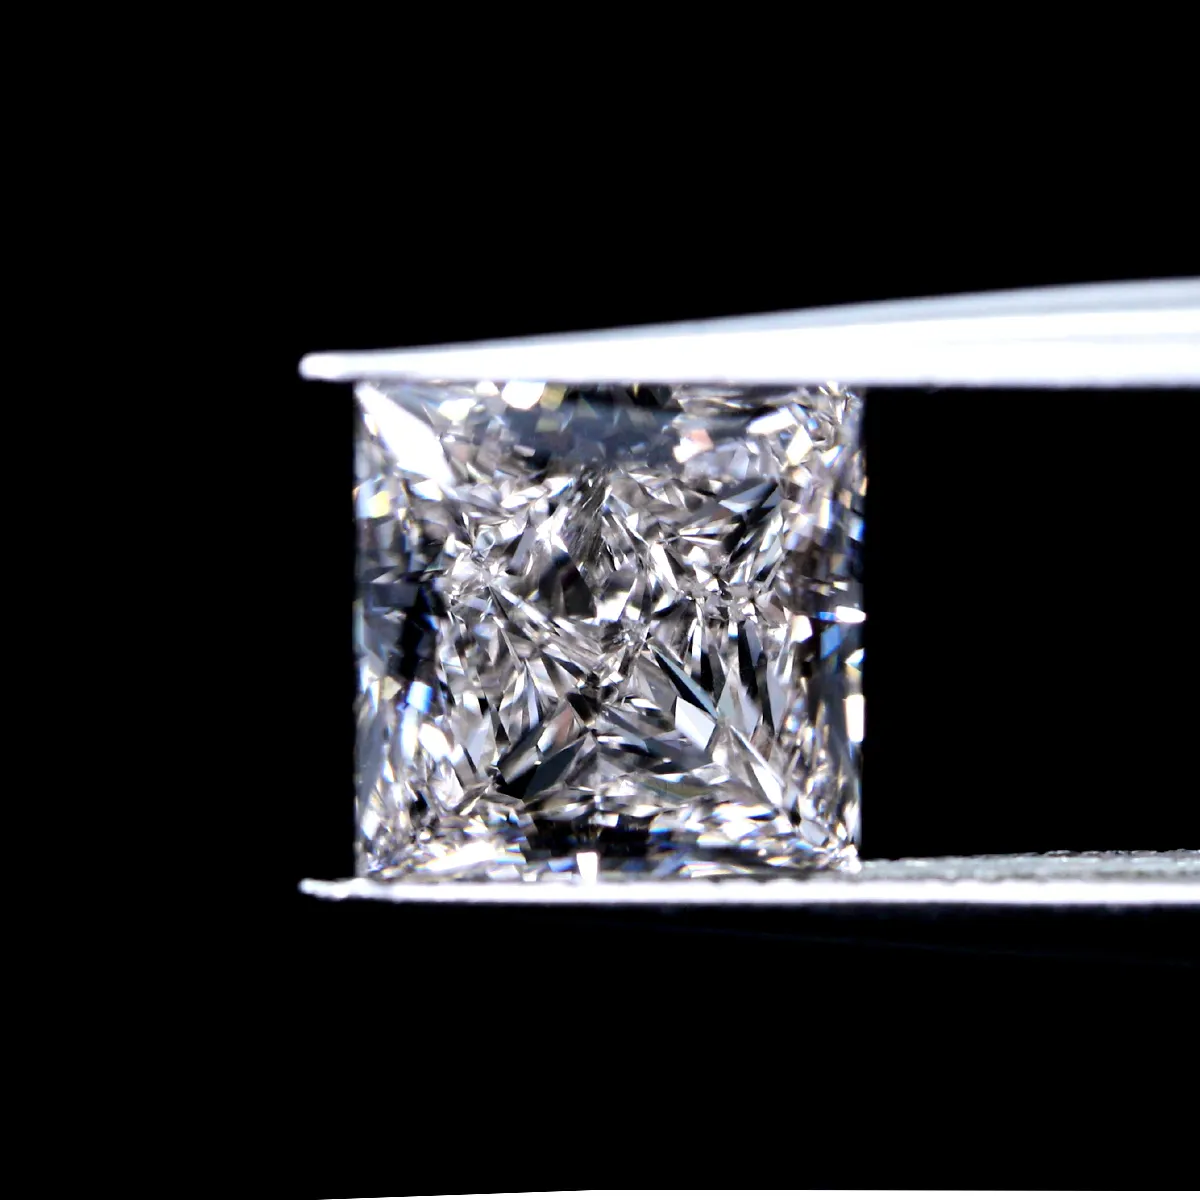 Hailer Jewelry IGI 4.04ct square VS2 Princess cut loose Lab Grown diamond for Jewelry design